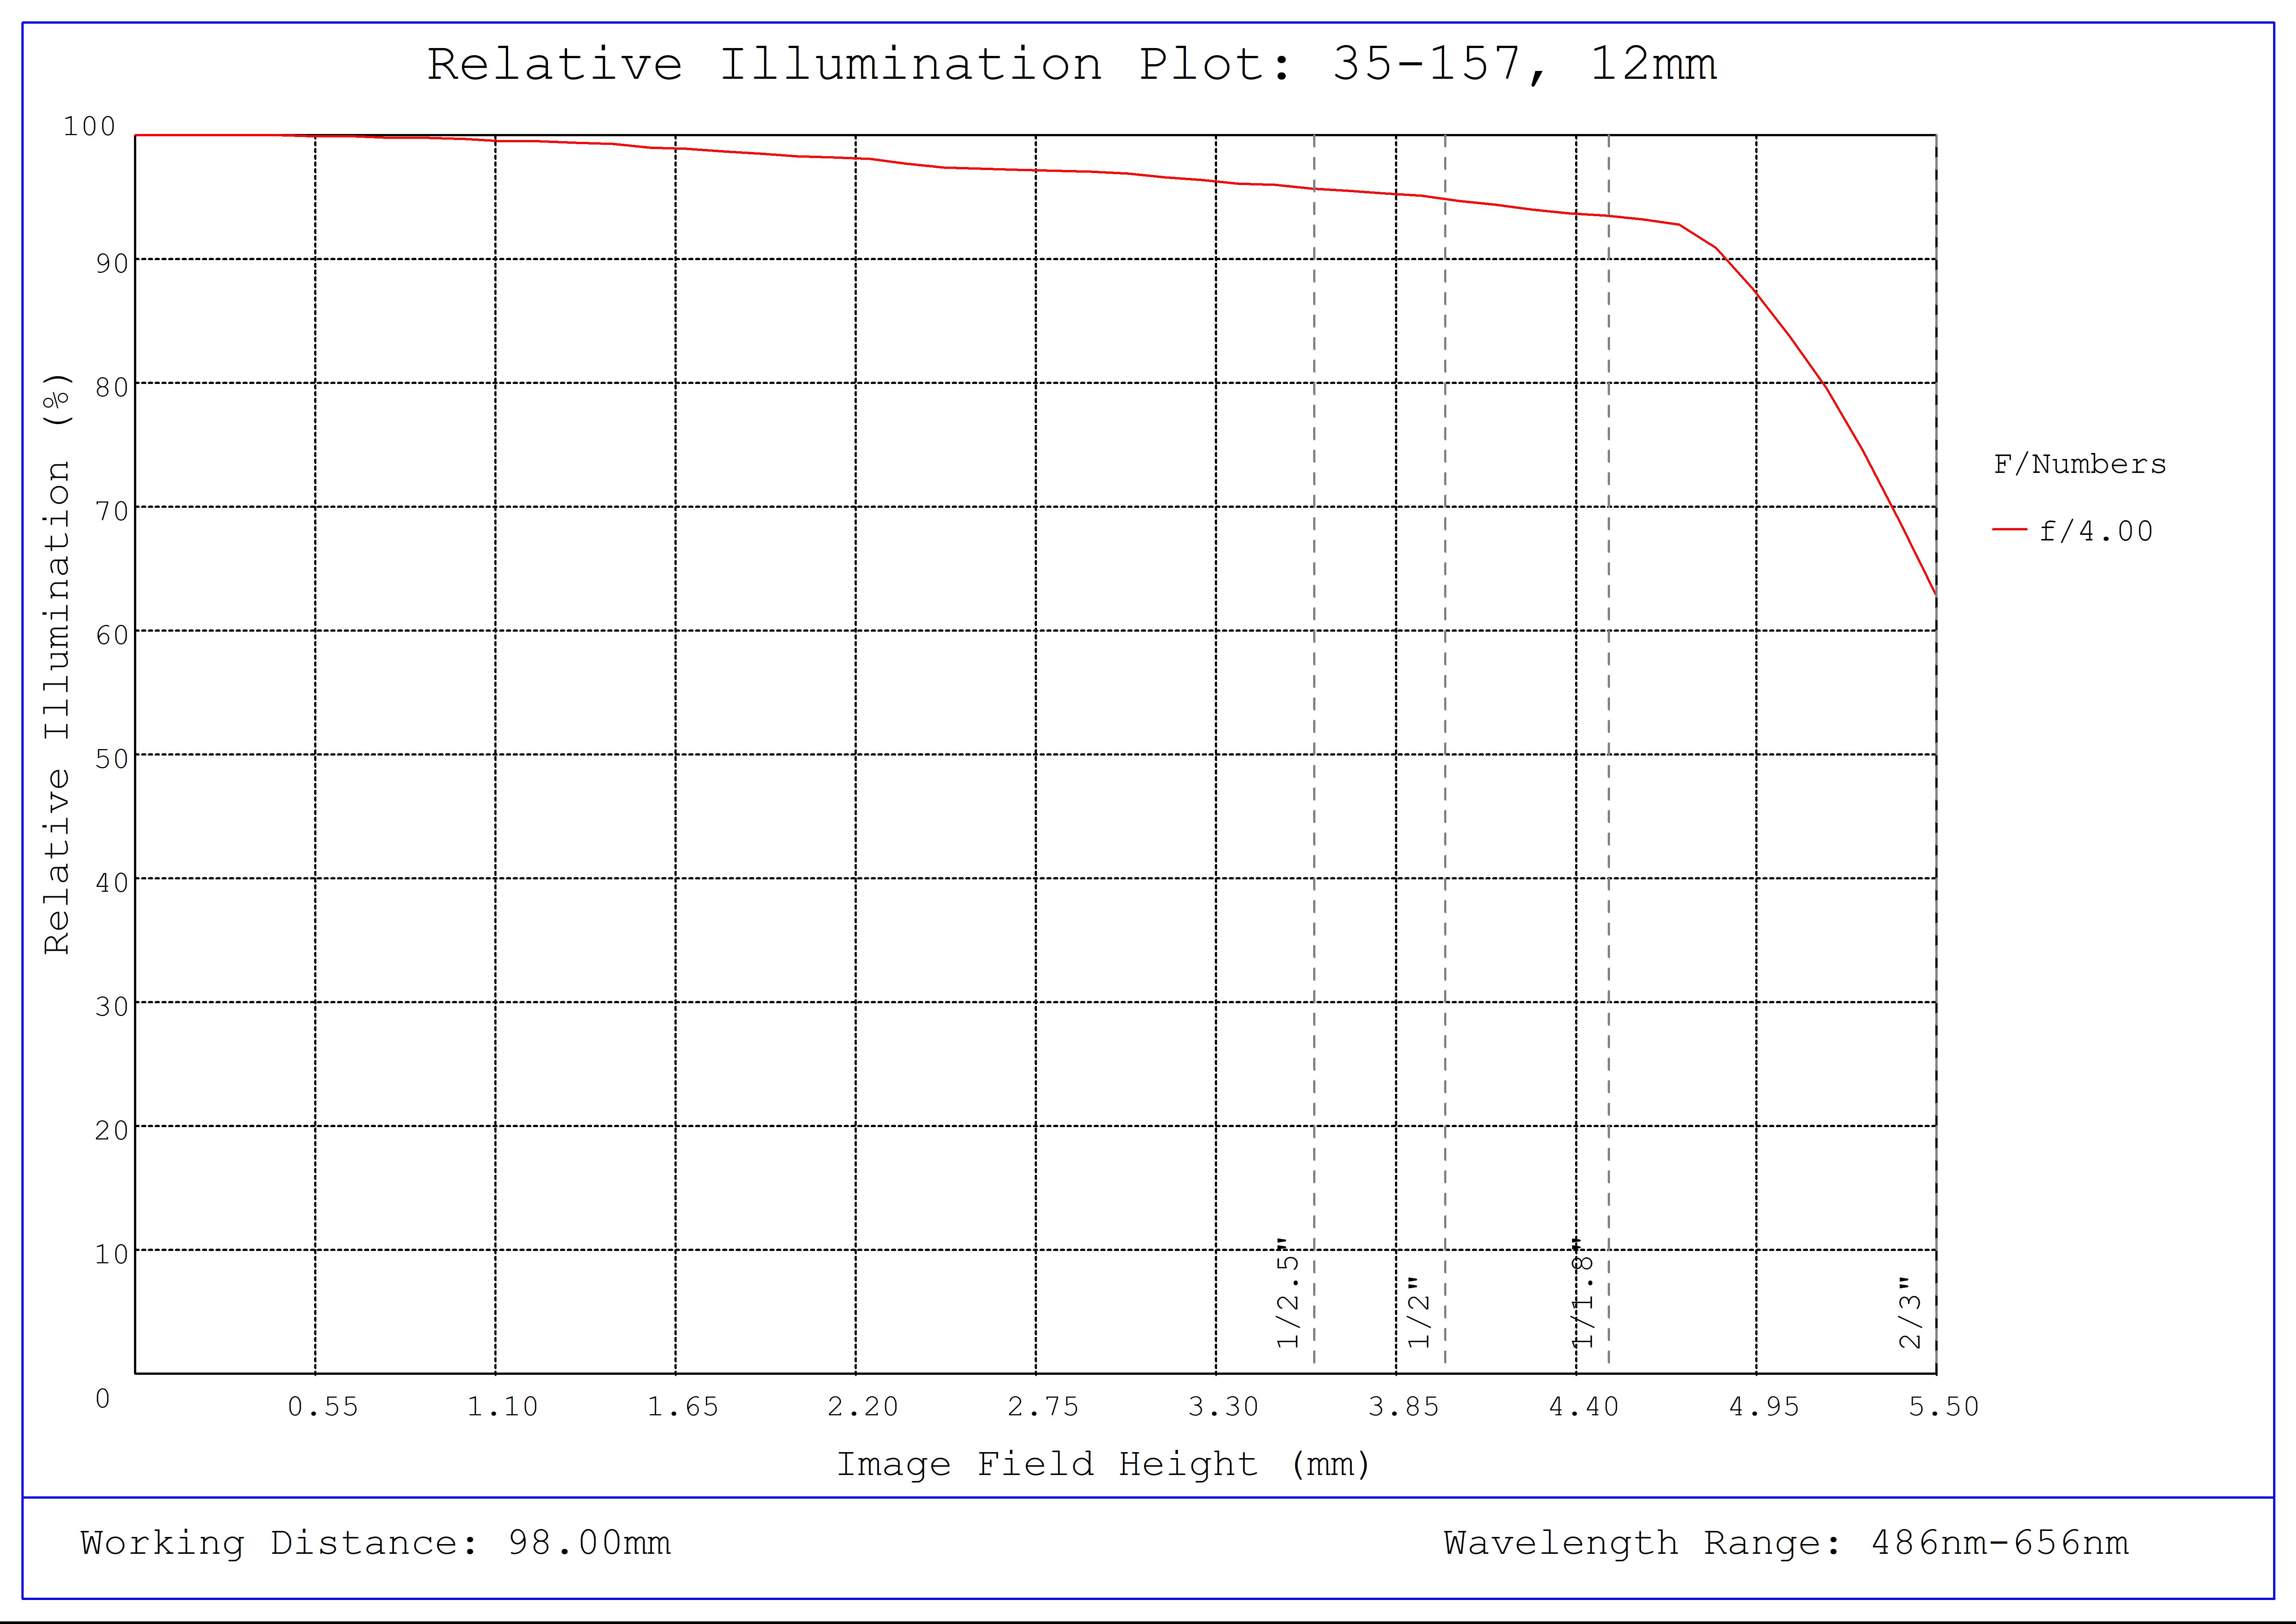 #35-157, 12mm, f/4 Cr Series Fixed Focal Length Lens, Relative Illumination Plot